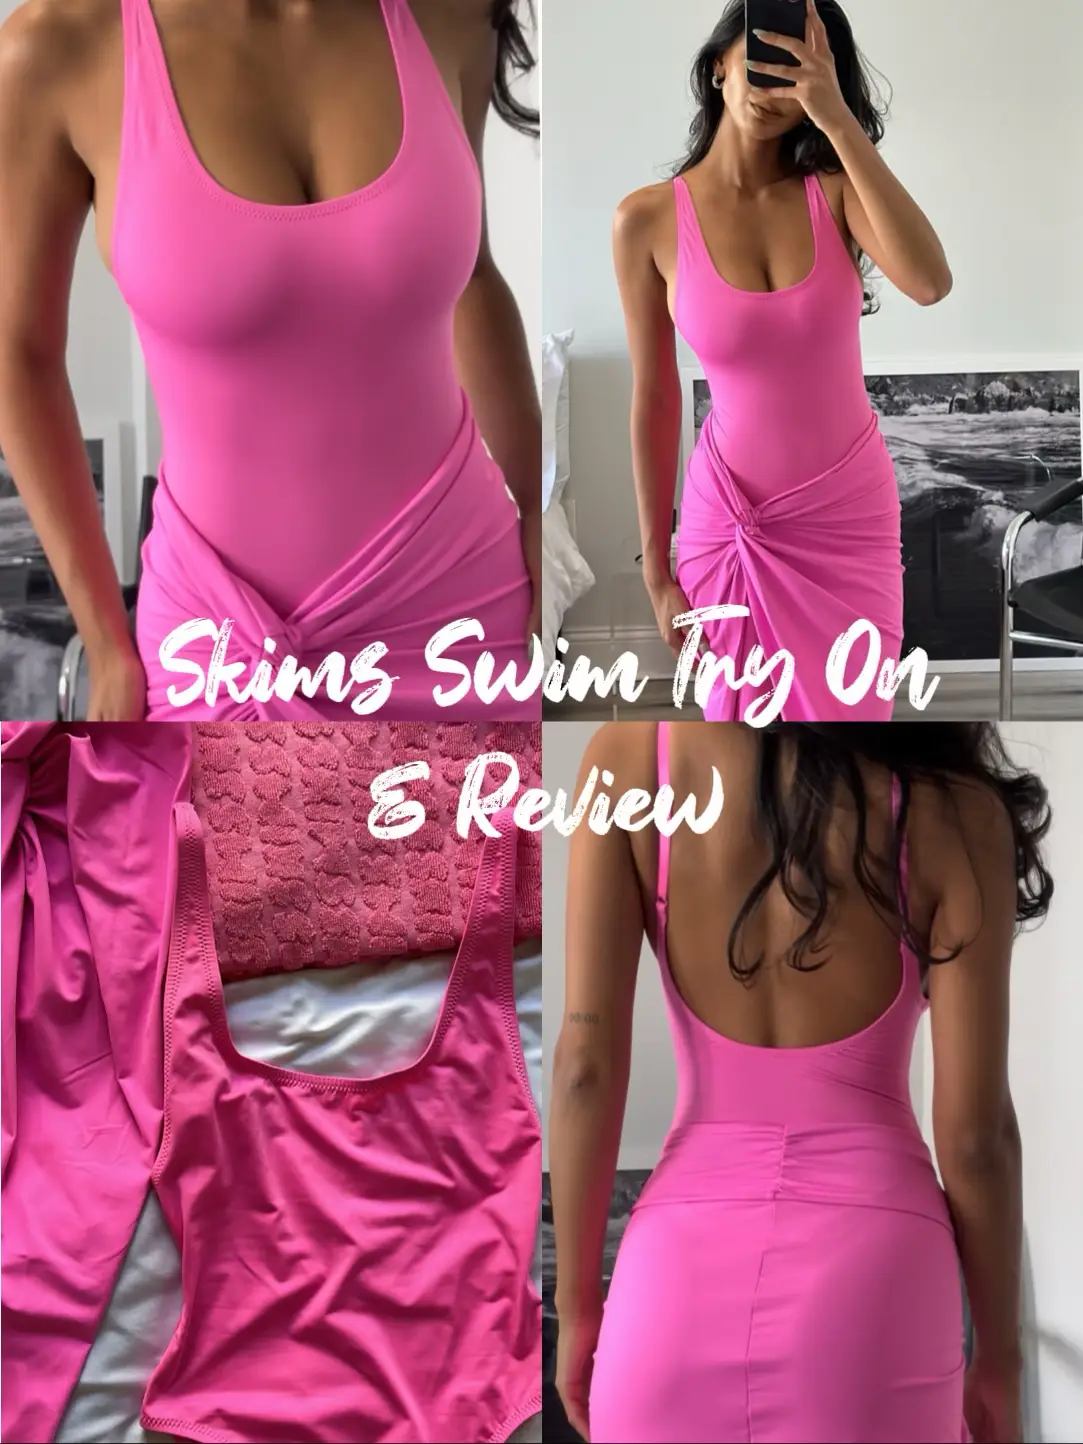 Skims Swim: Turquoise Bikini Review, Gallery posted by Lexirosenstein